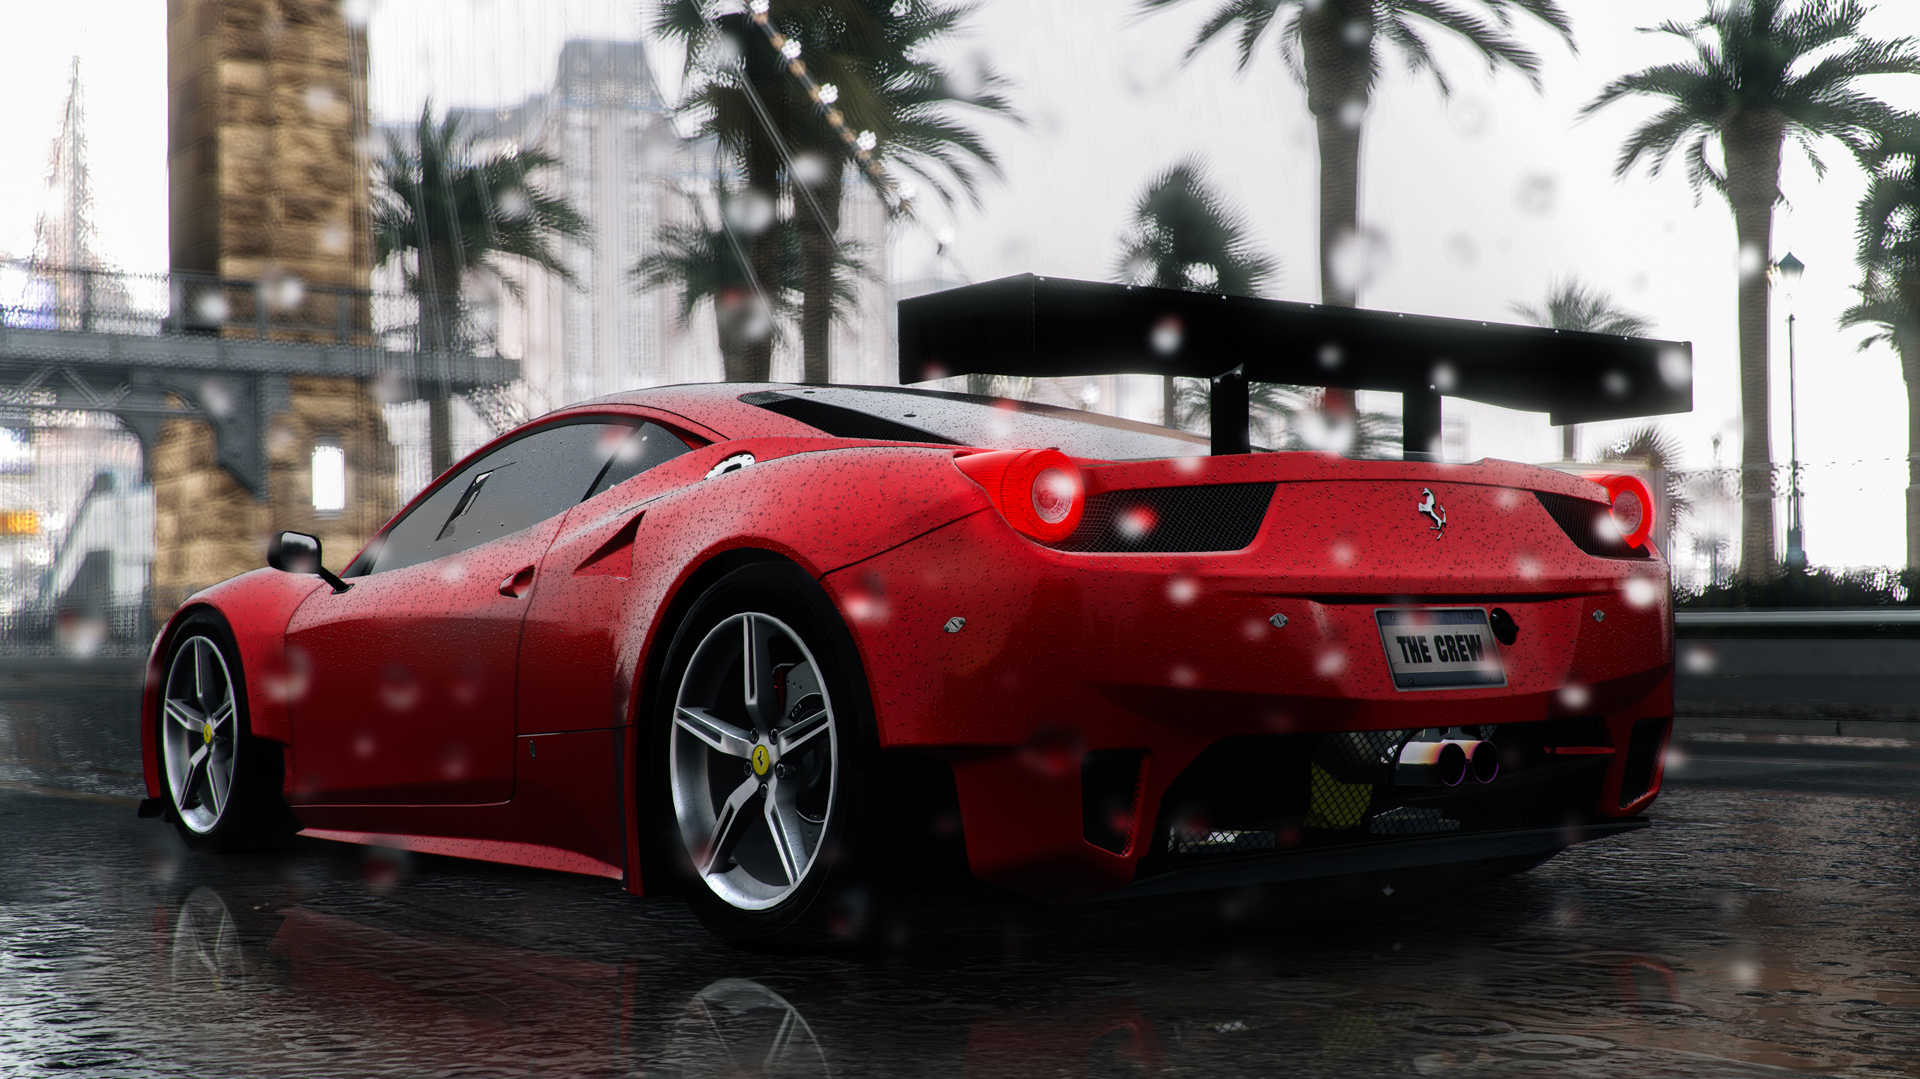 Ferrari_Rain2_213030.jpg